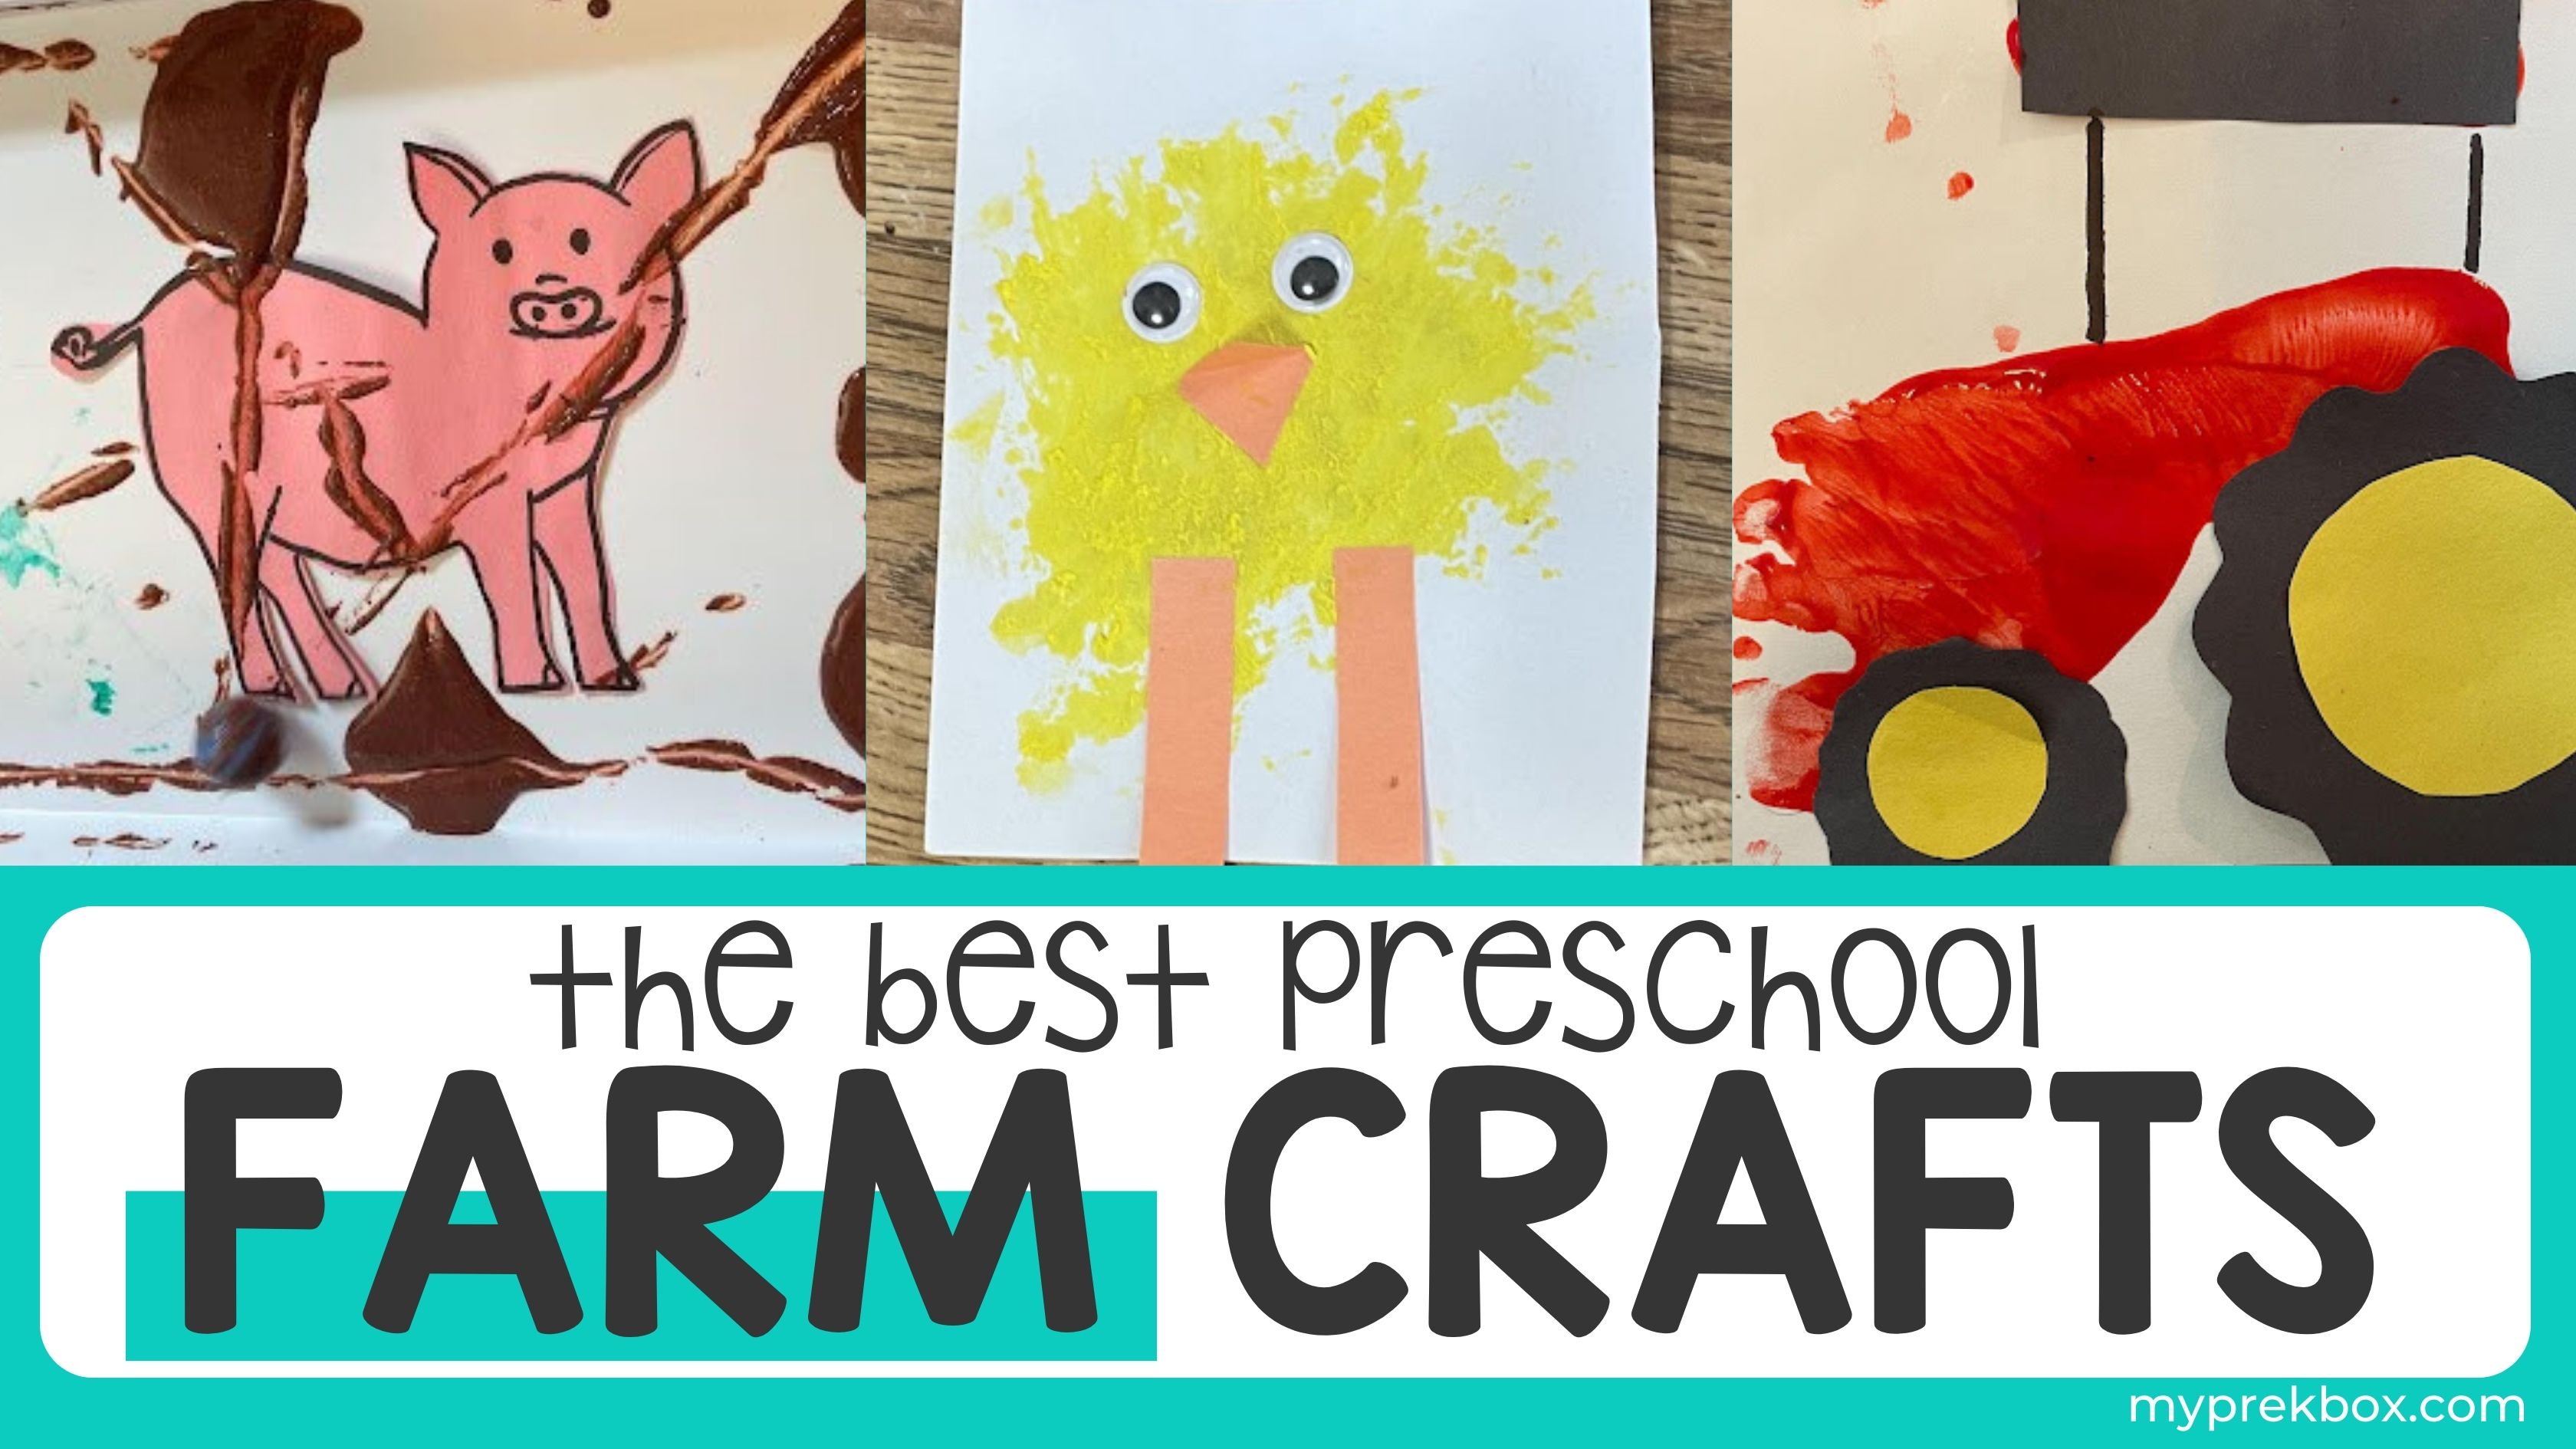 The Cutest Farm Crafts for Preschool Kids